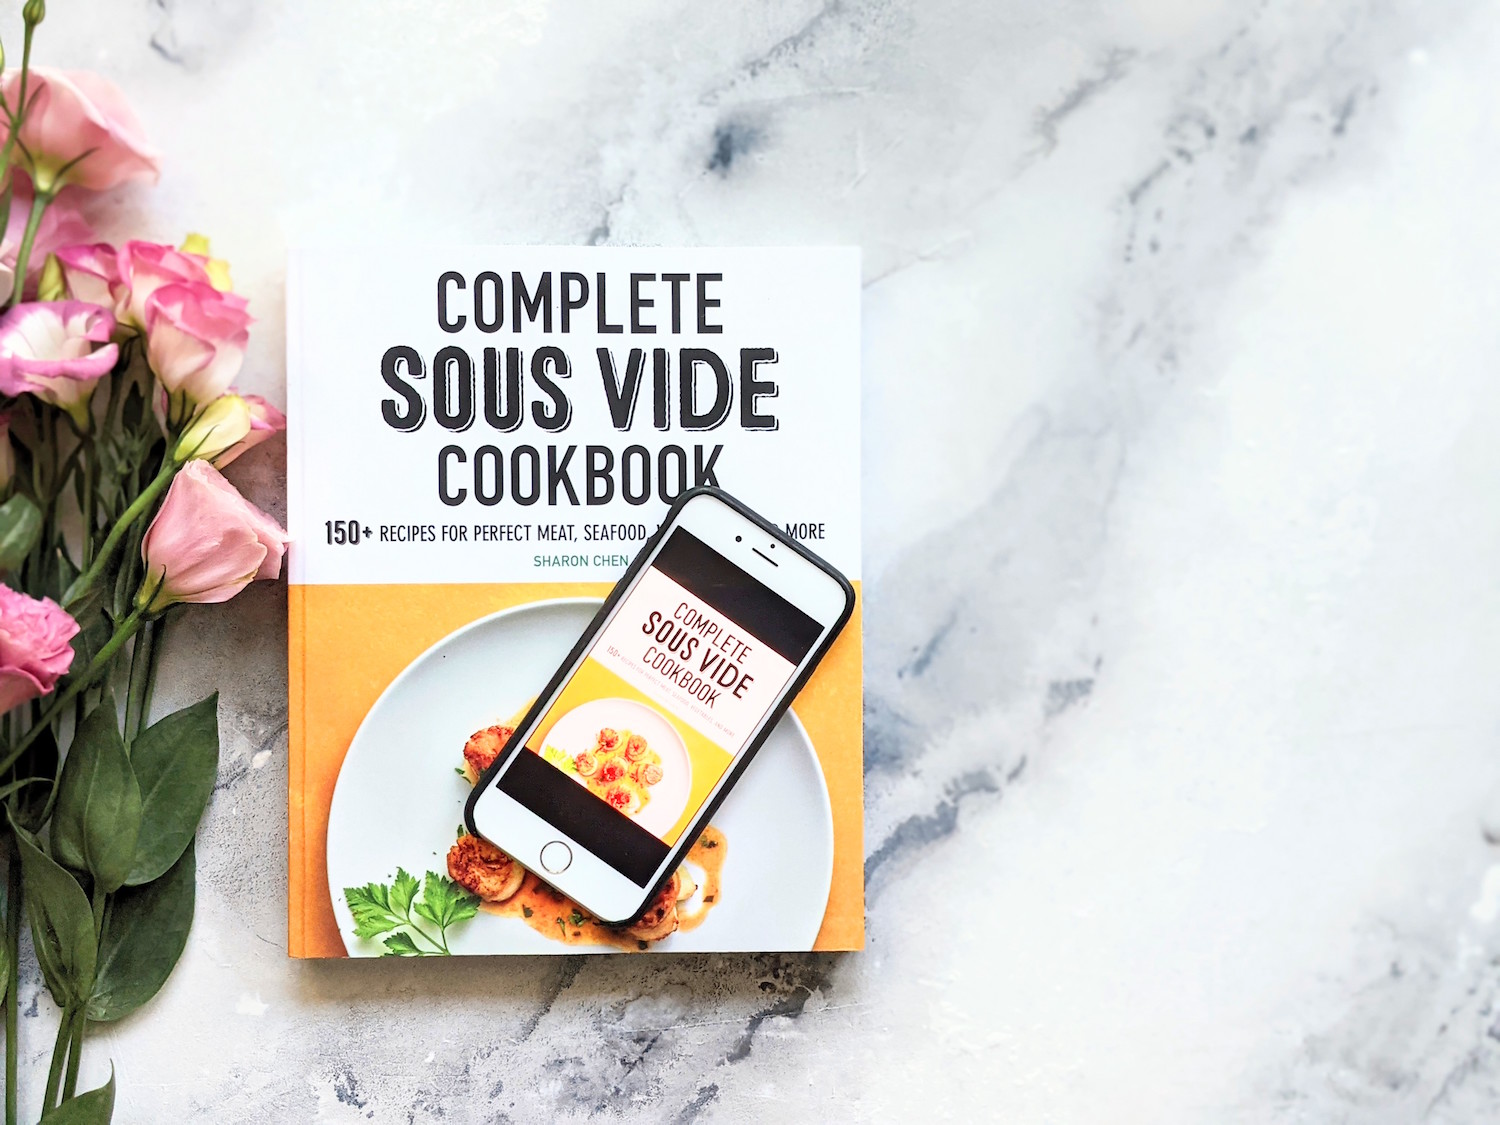 Print copy and digital copy of Complete Sous Vide Cookbook